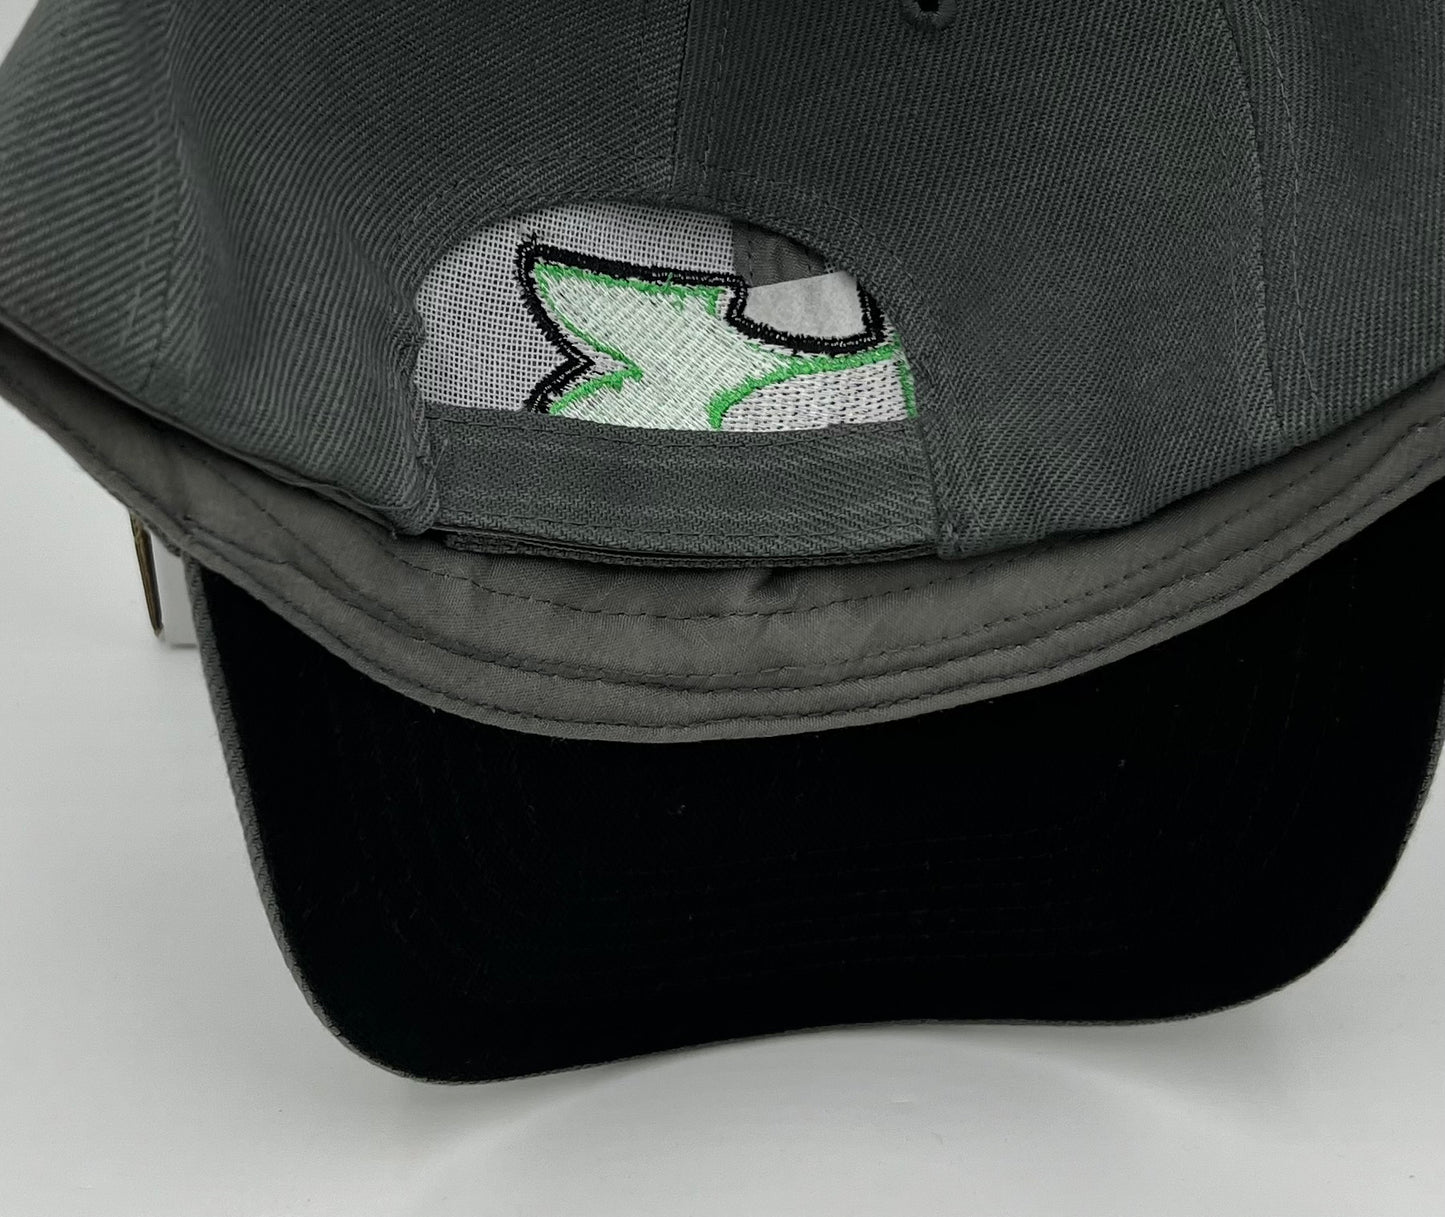 Kawasaki Embroidered Hat